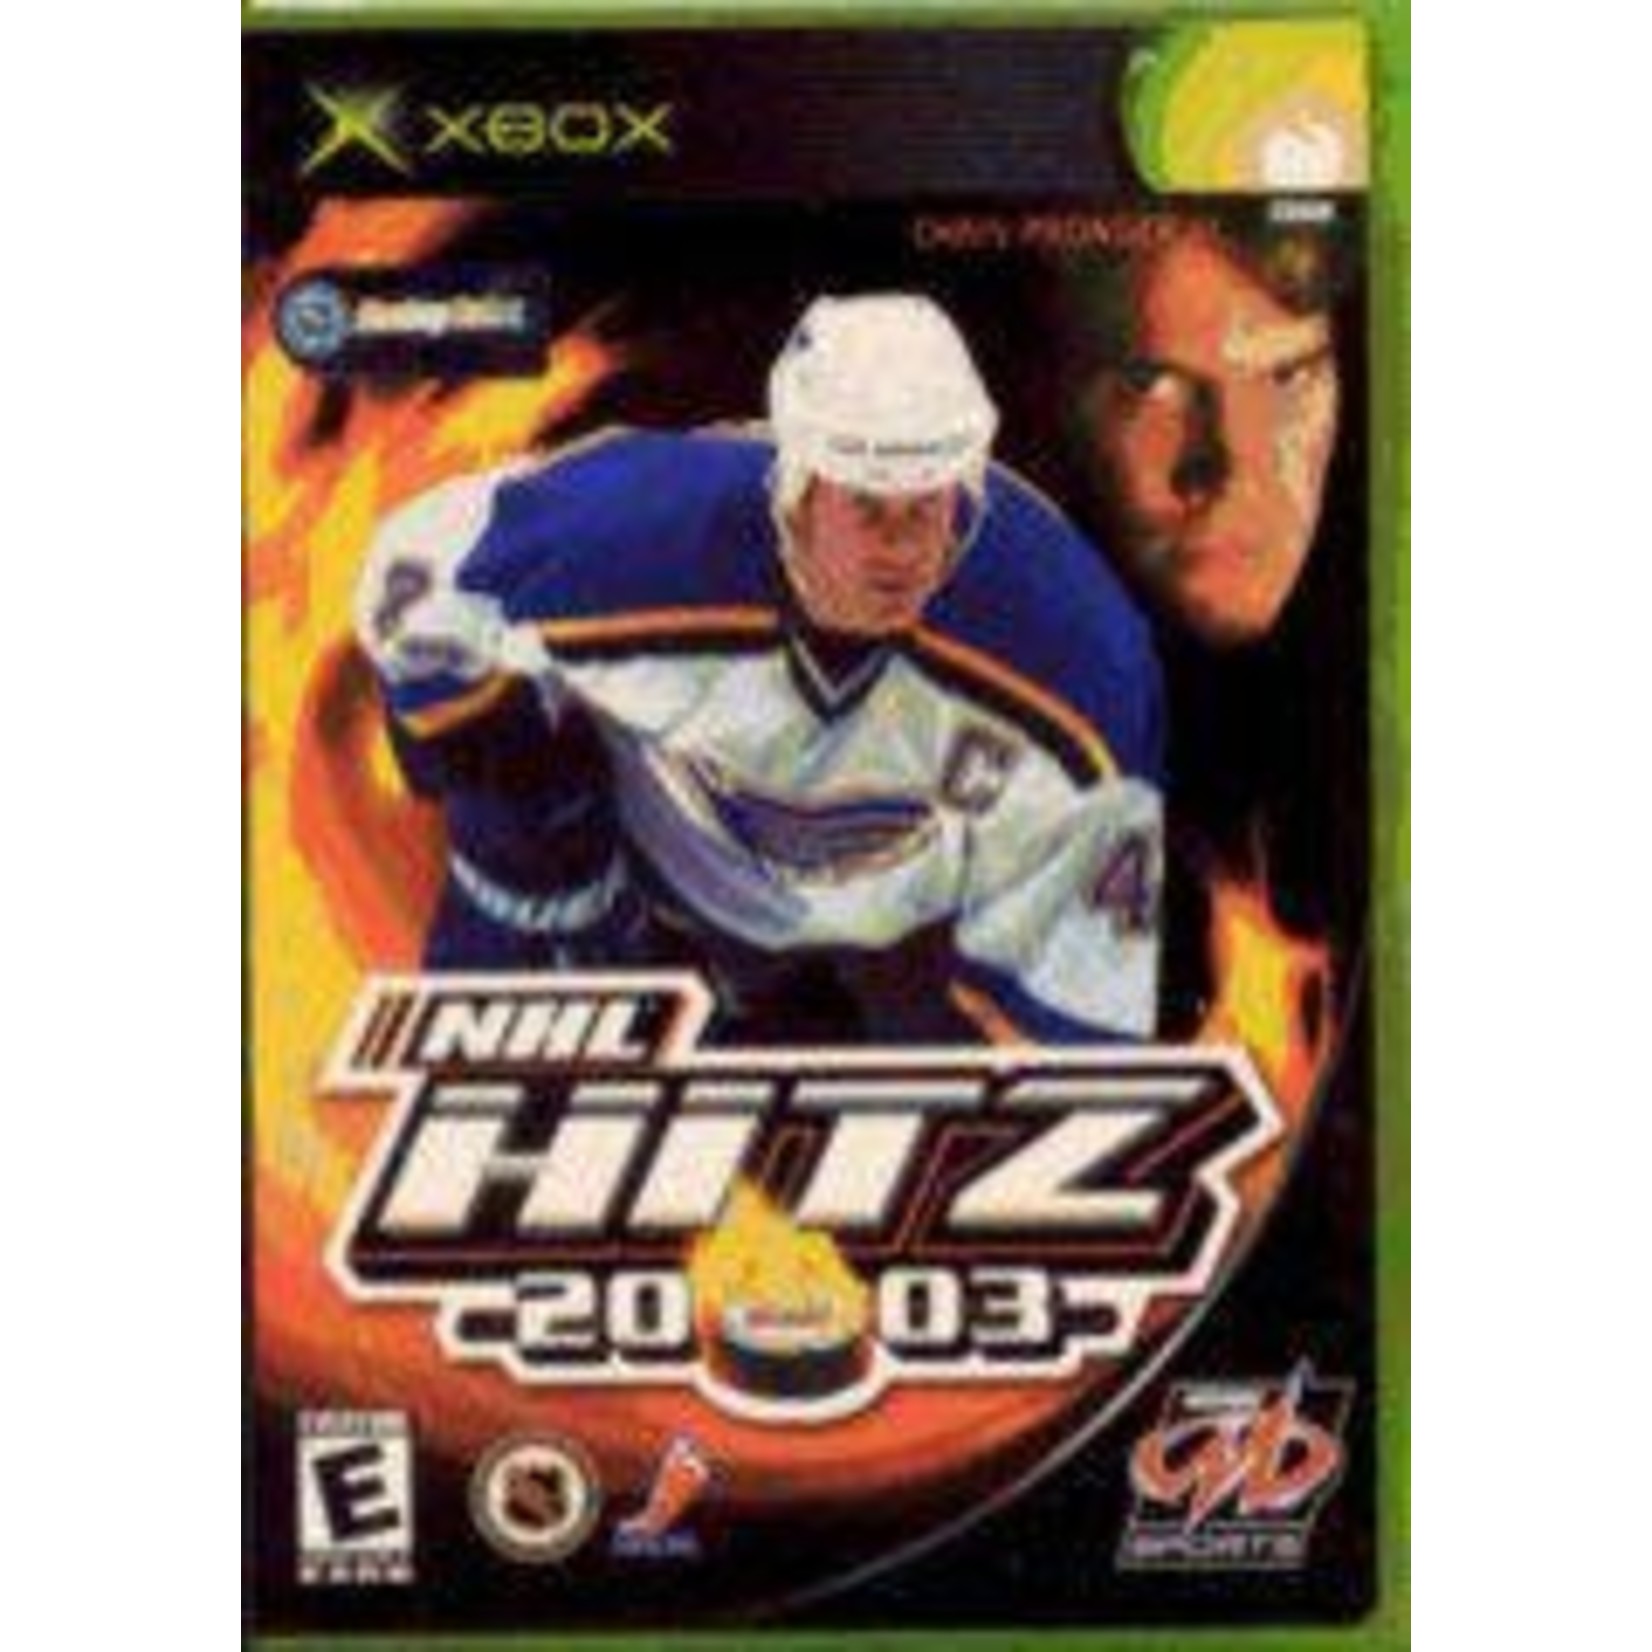 Xbox NHL Hitz 2003 [Xbox]